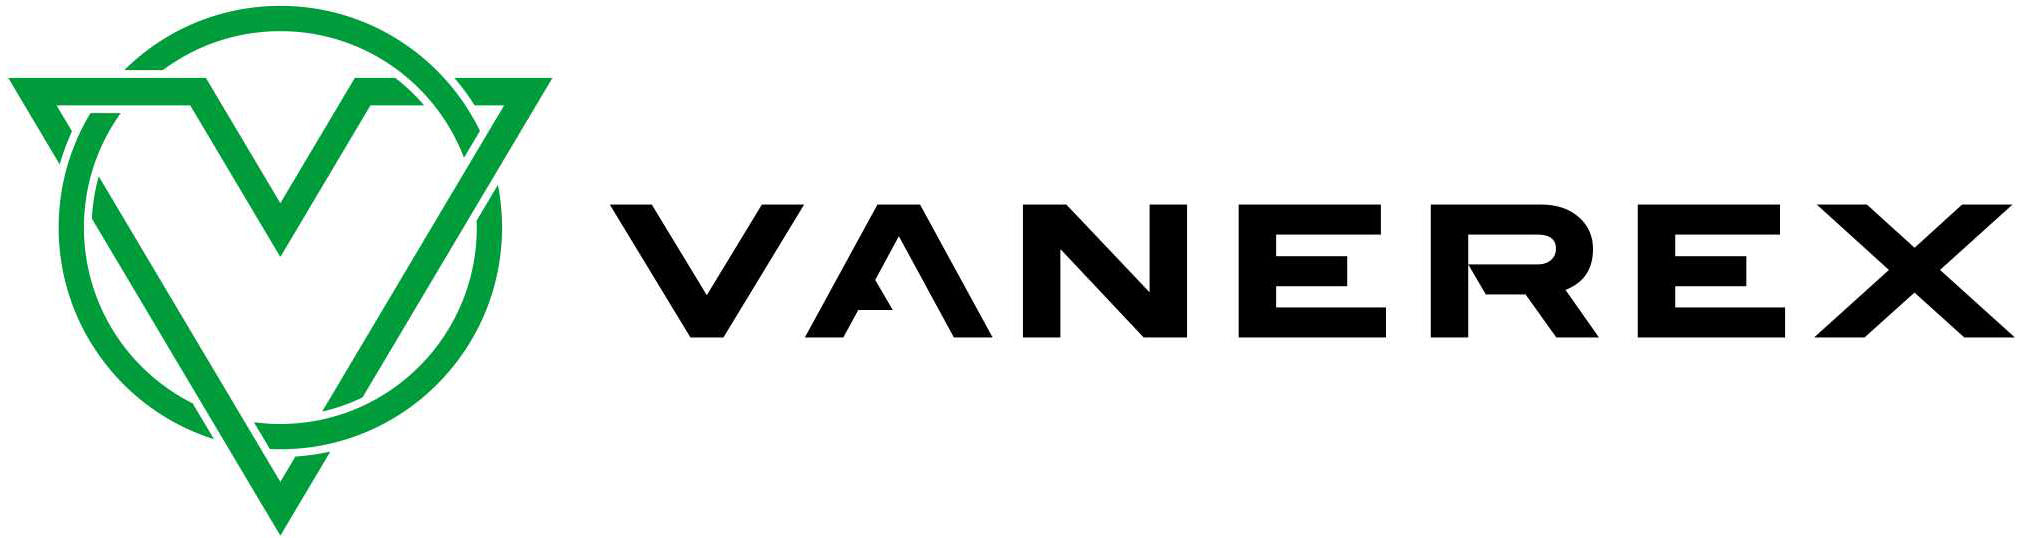 Vanerex logo